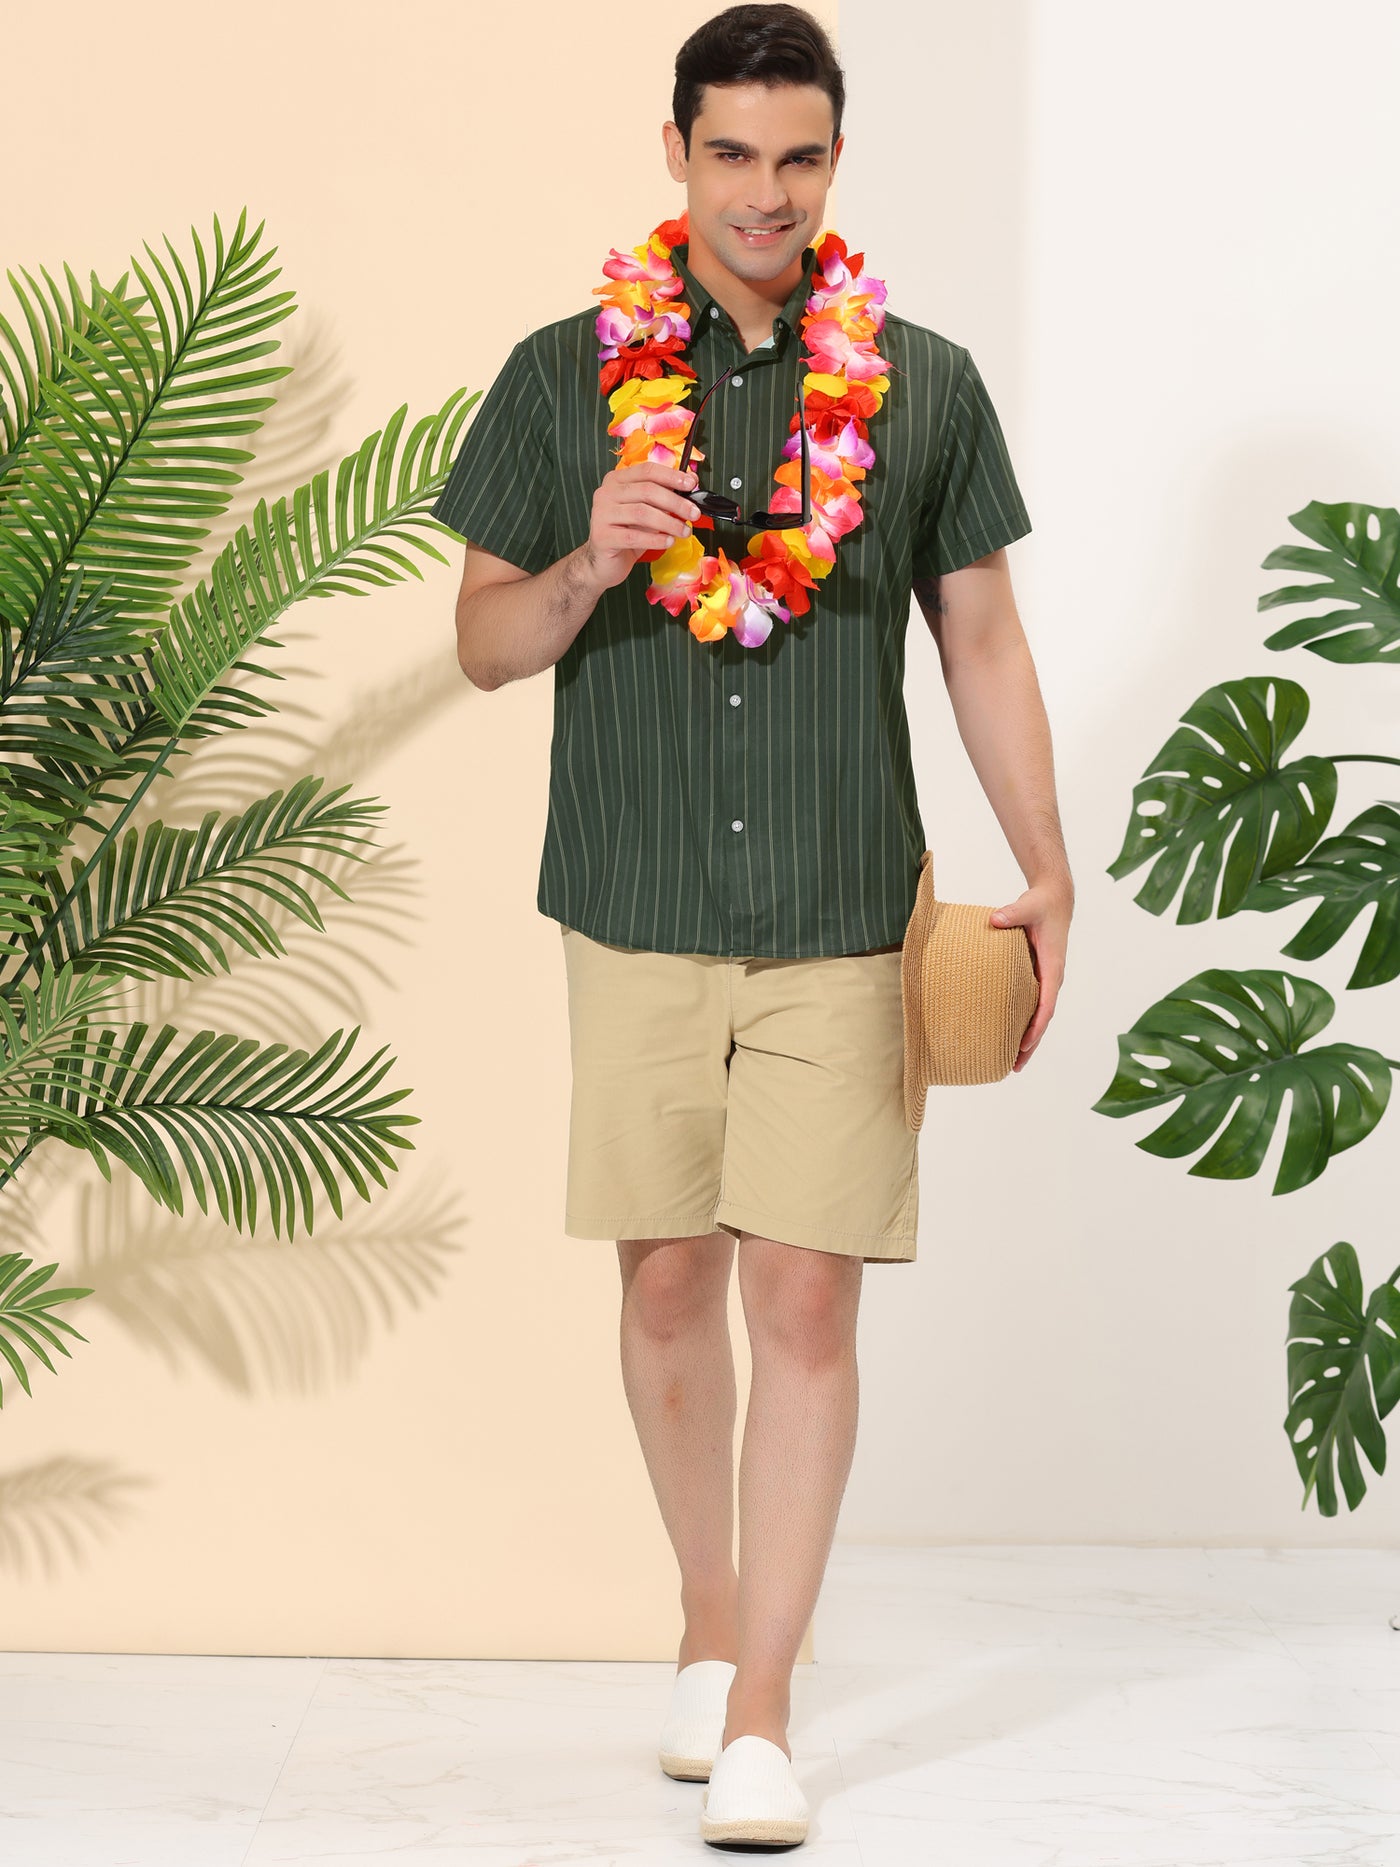 Bublédon Men's Summer Striped Shirt Button Down Short Sleeve Color Block Hawaiian Shirts